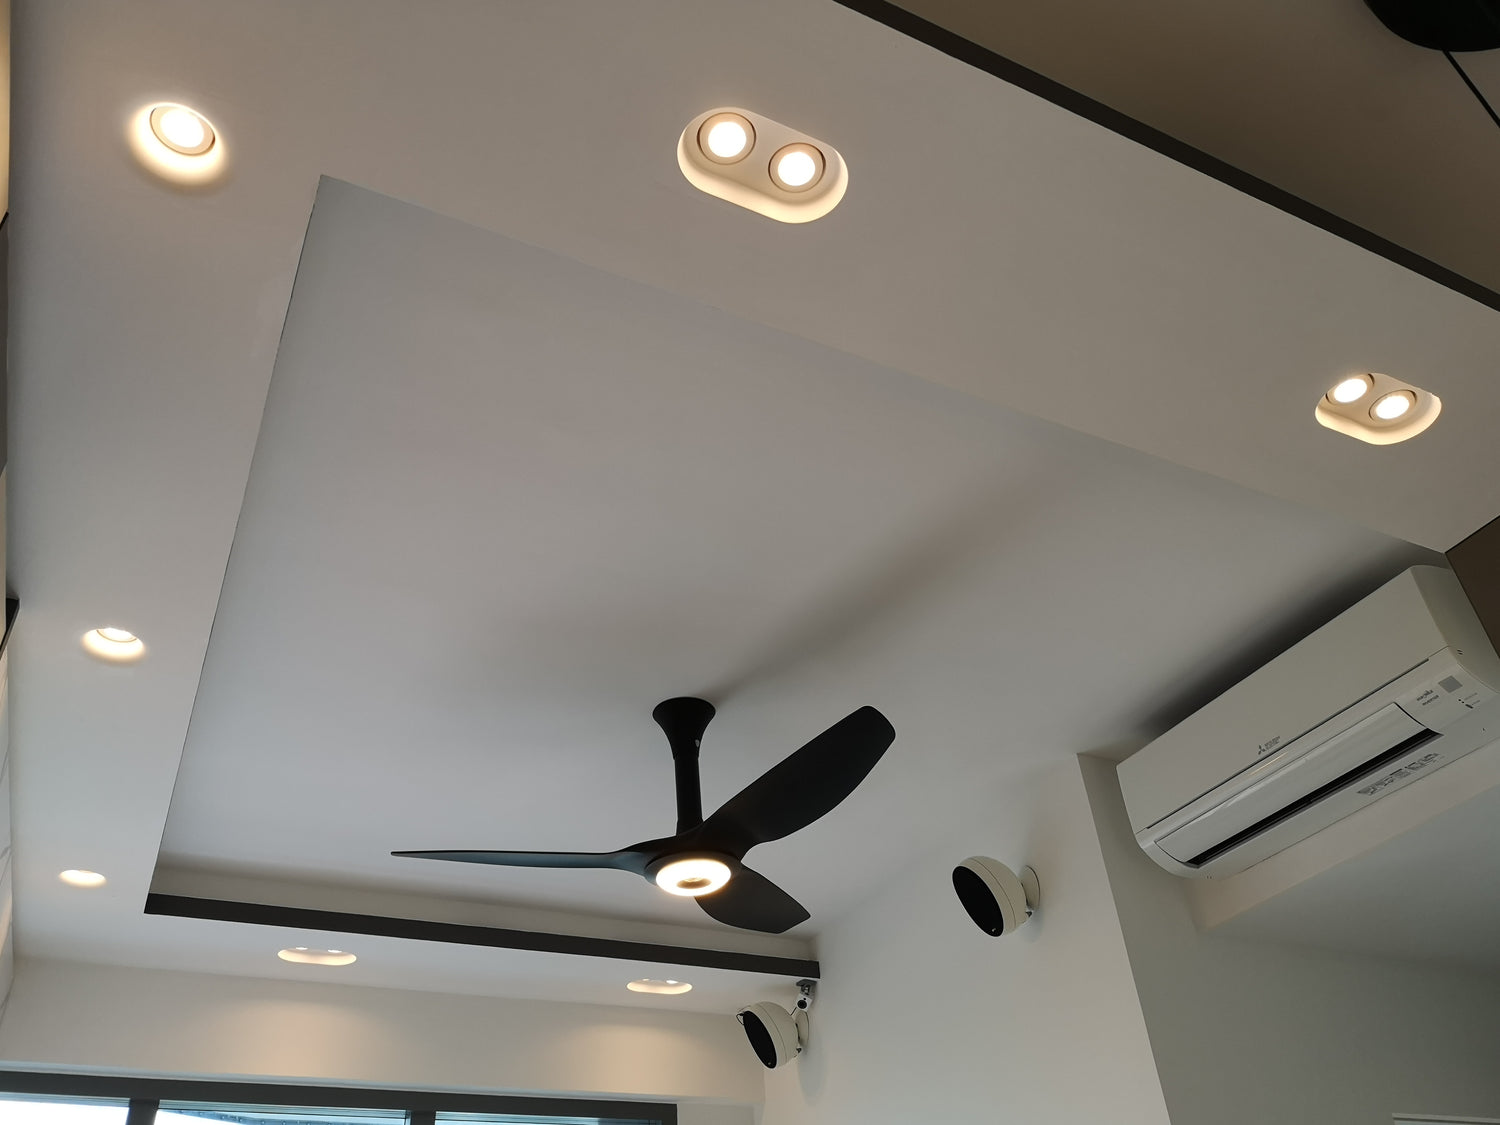 Designer Lights Ceiling Fans Made for Siingapore Homes